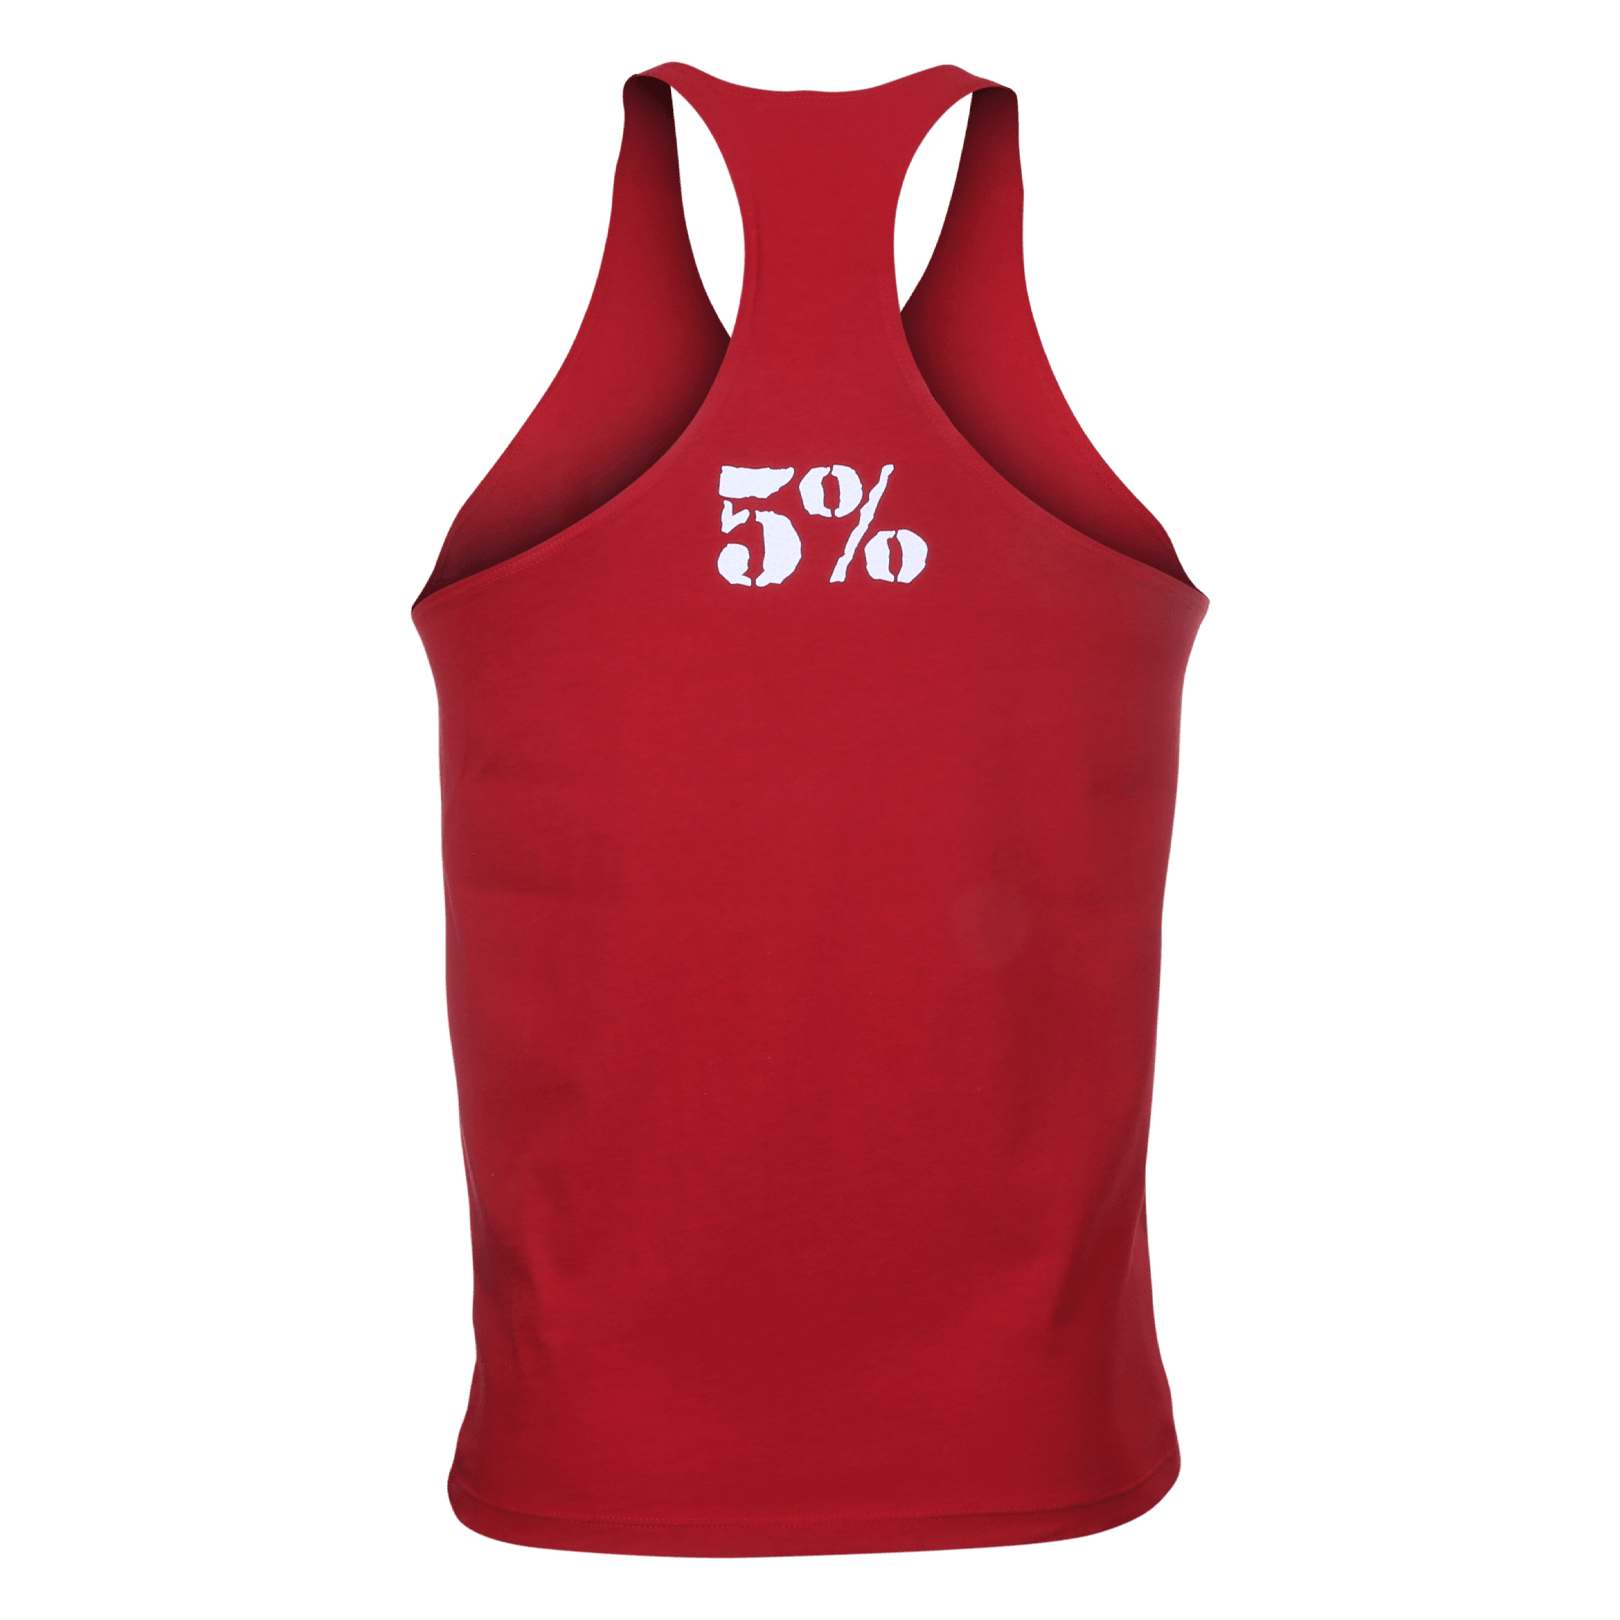 5% Flag, Red Stringer Tank with white Lettering - 5% Nutrition